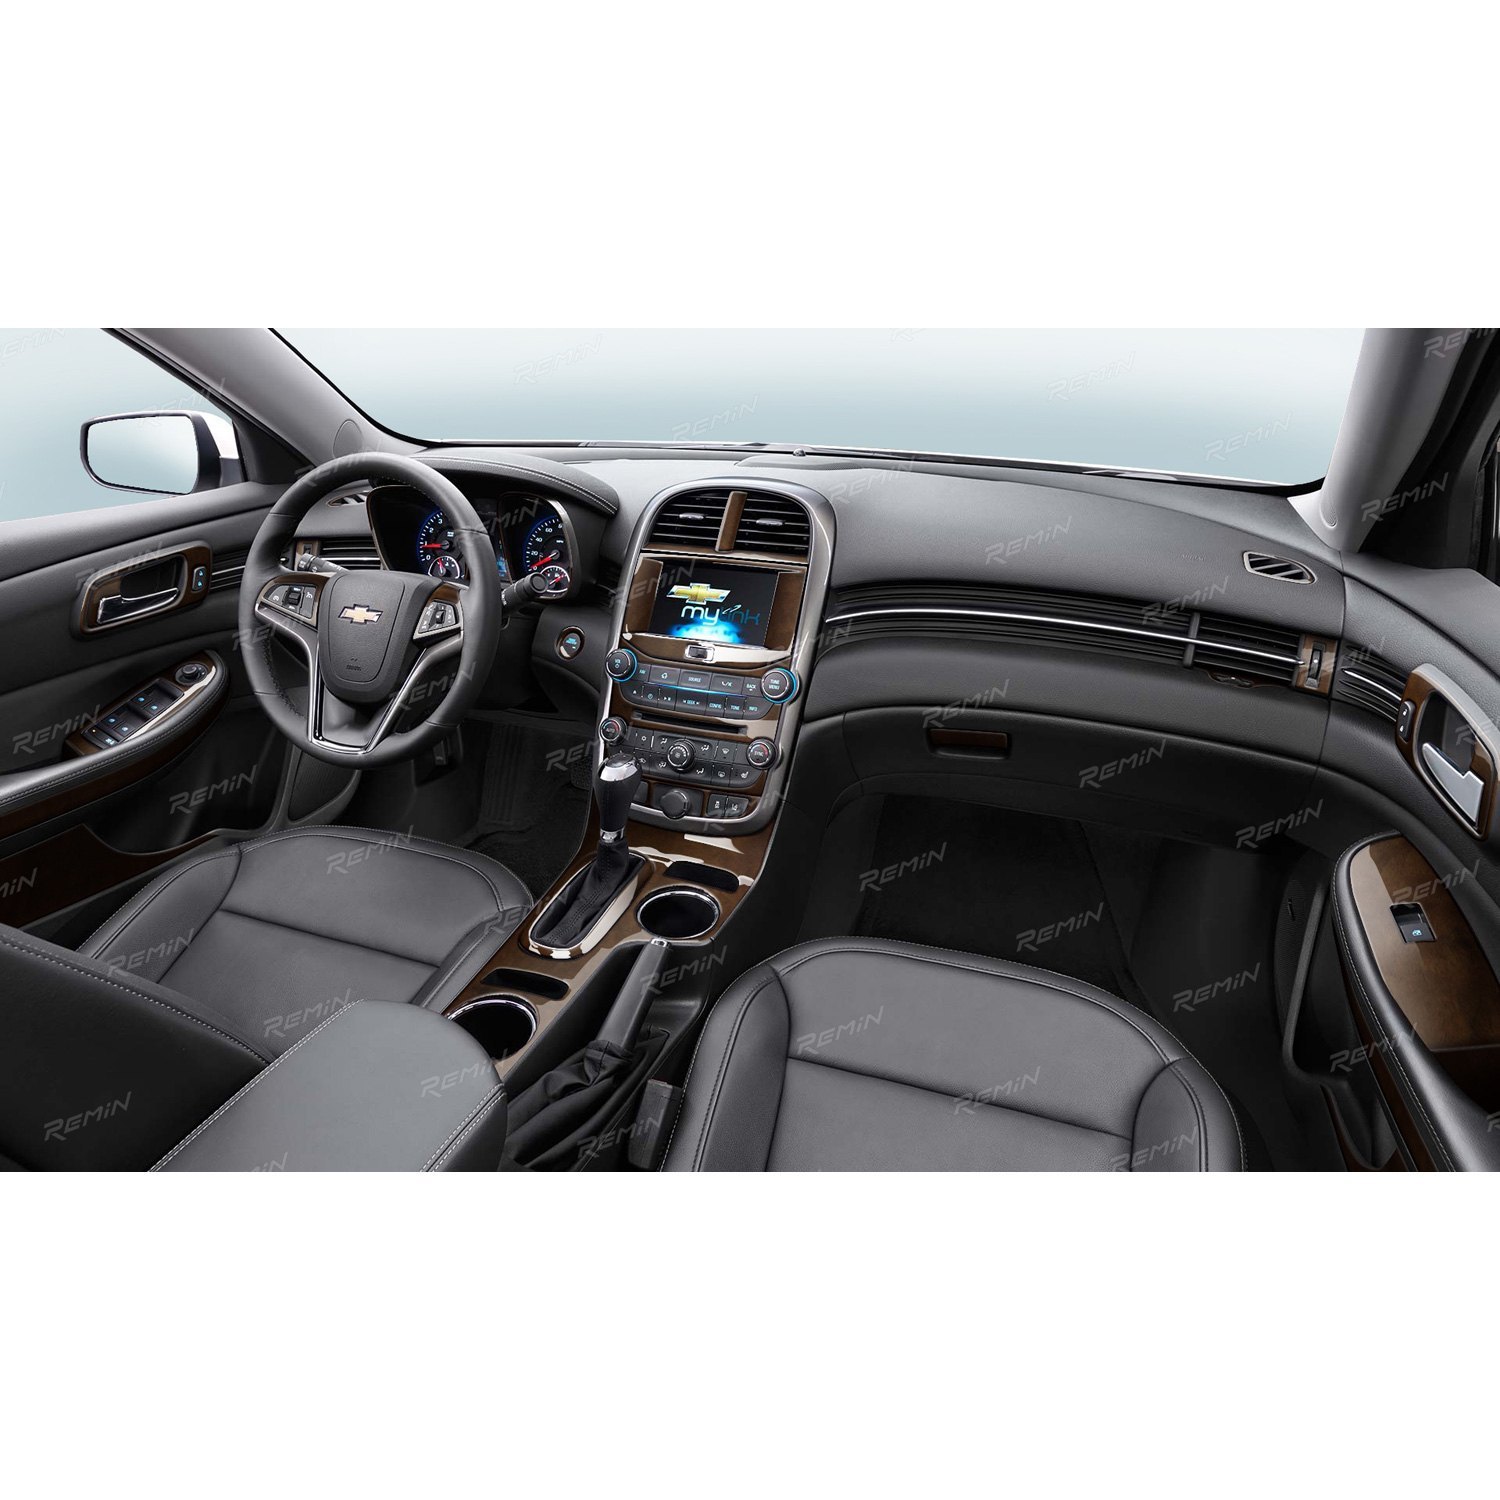 Brushed Black Aluminum Rvinyl Rdash Dash Kit Decal Trim for Chevrolet Malibu 2013-2015